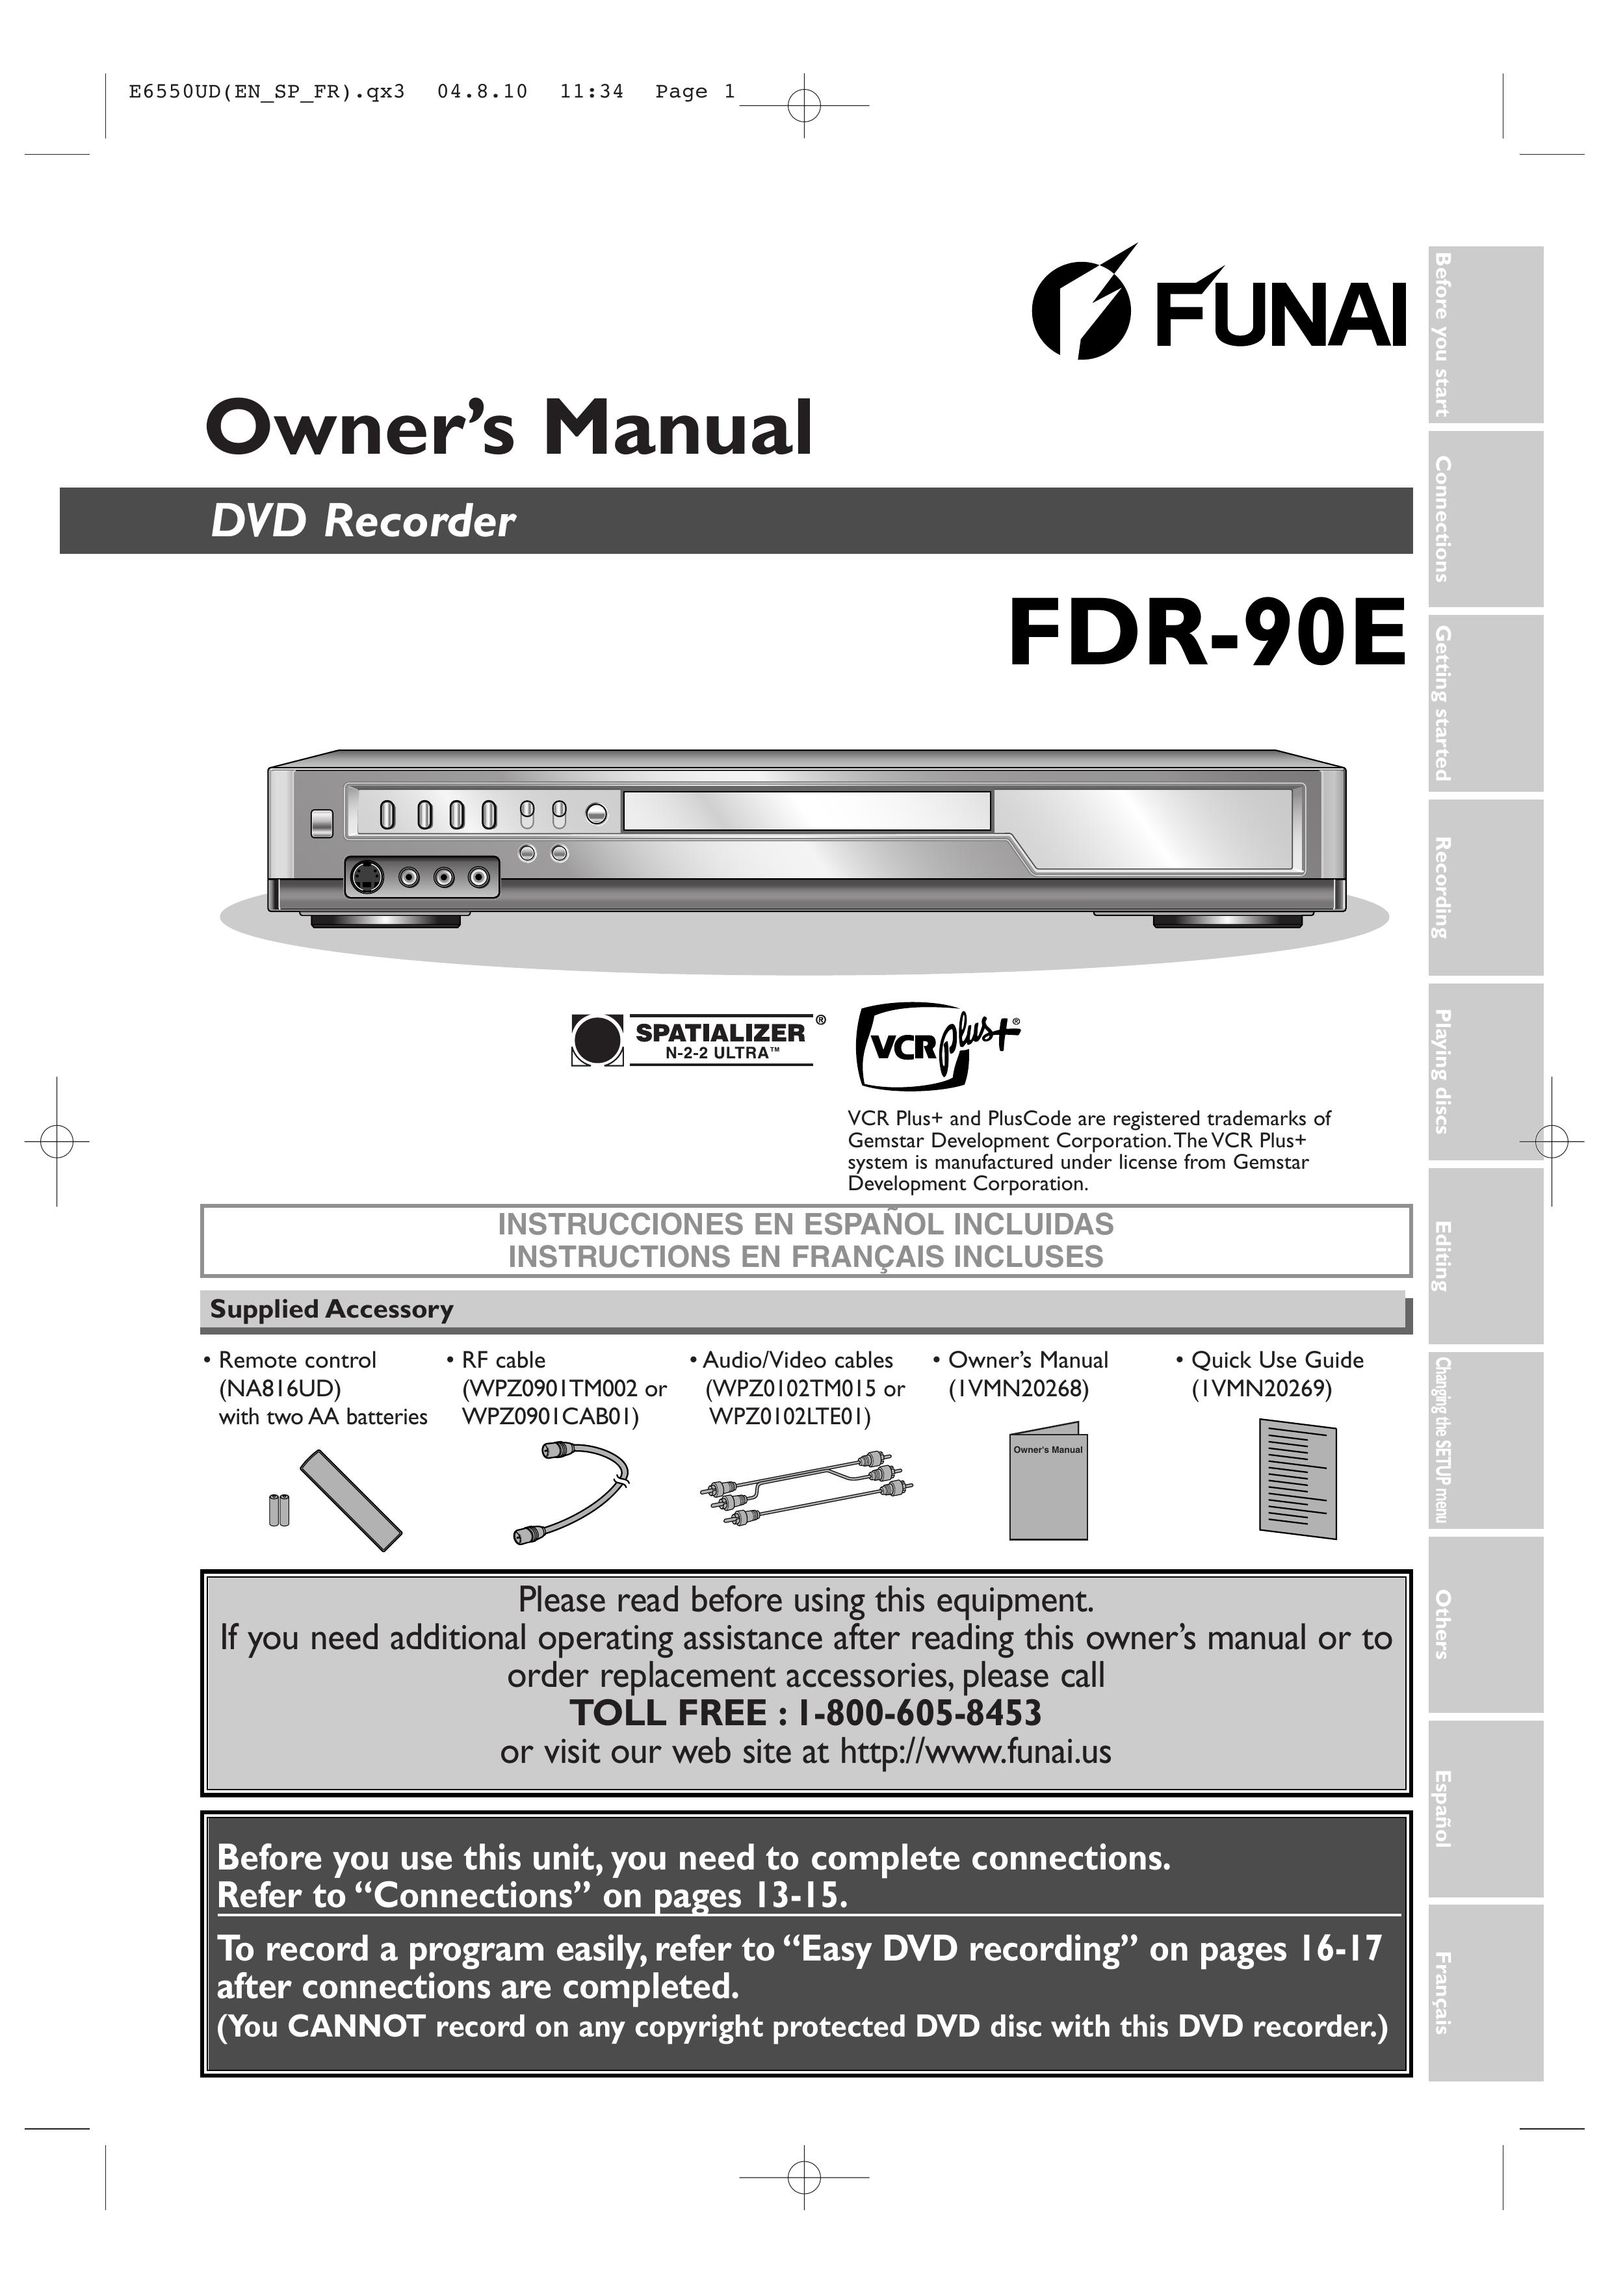 FUNAI FDR-90E DVD Recorder User Manual